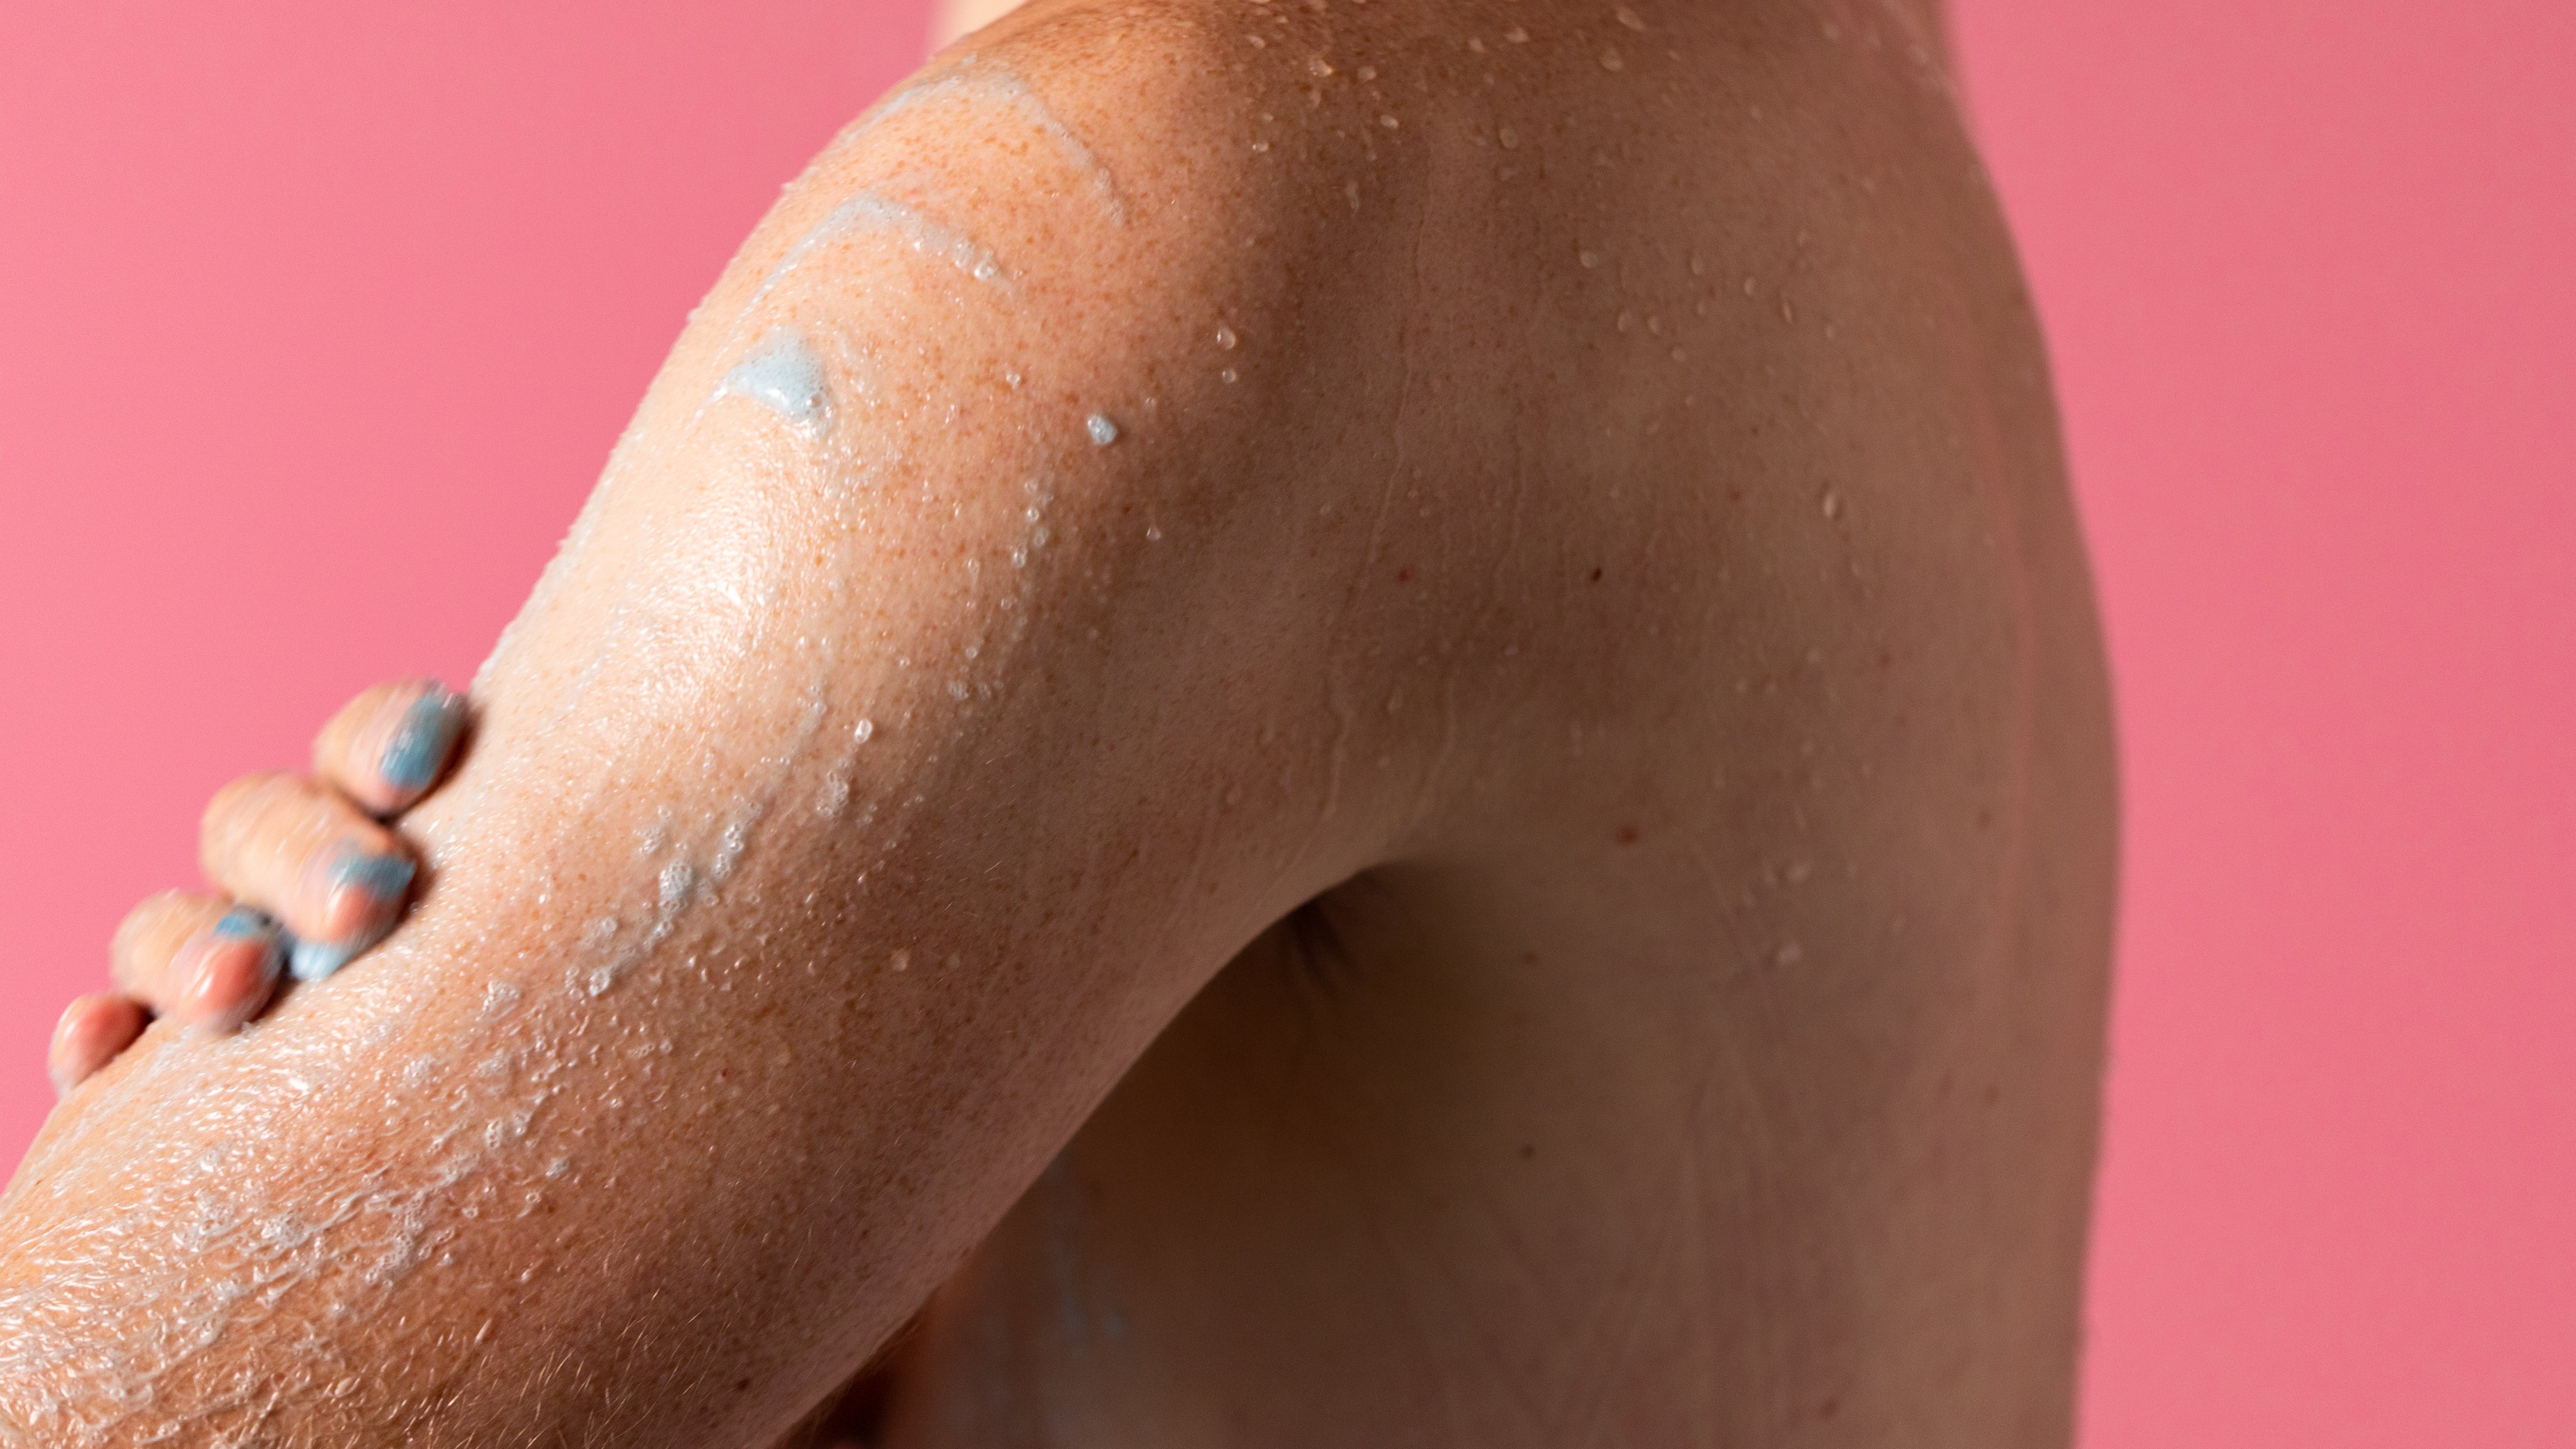 Model is using Rub Rub Rub shower scrub, gently exfoliating the shoulder and upper arm, on a pink background.